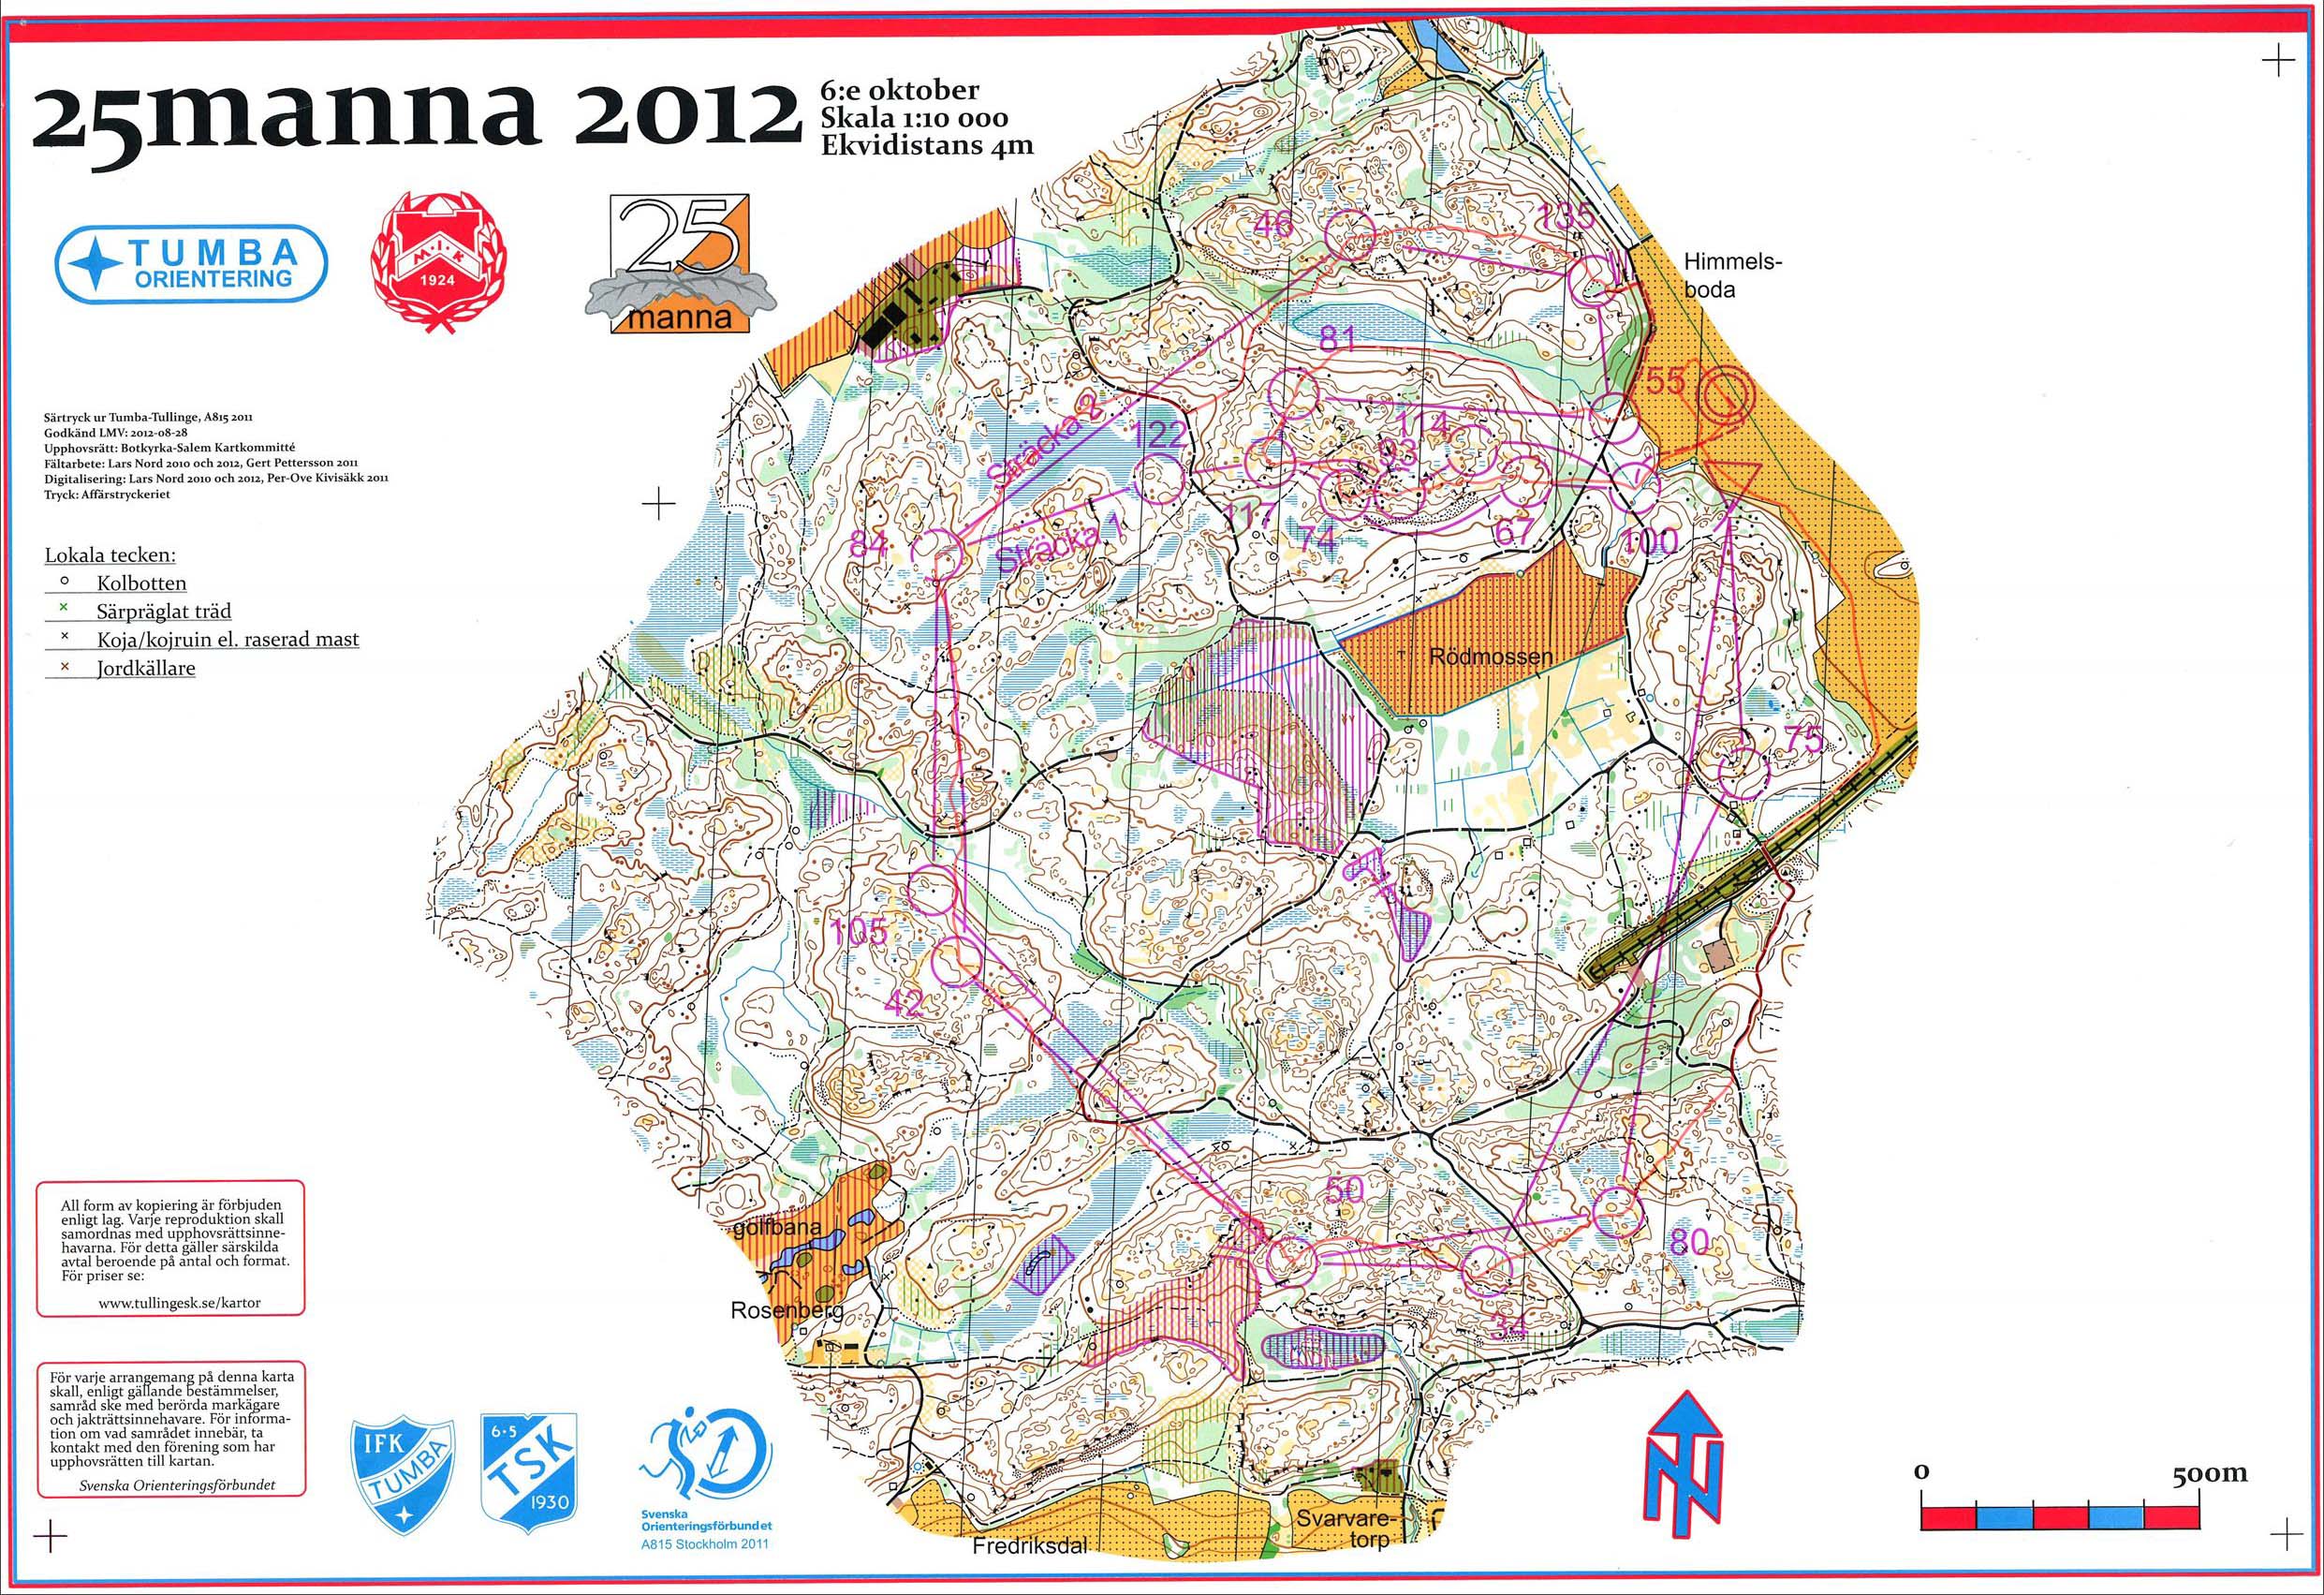 25manna (2012-10-06)